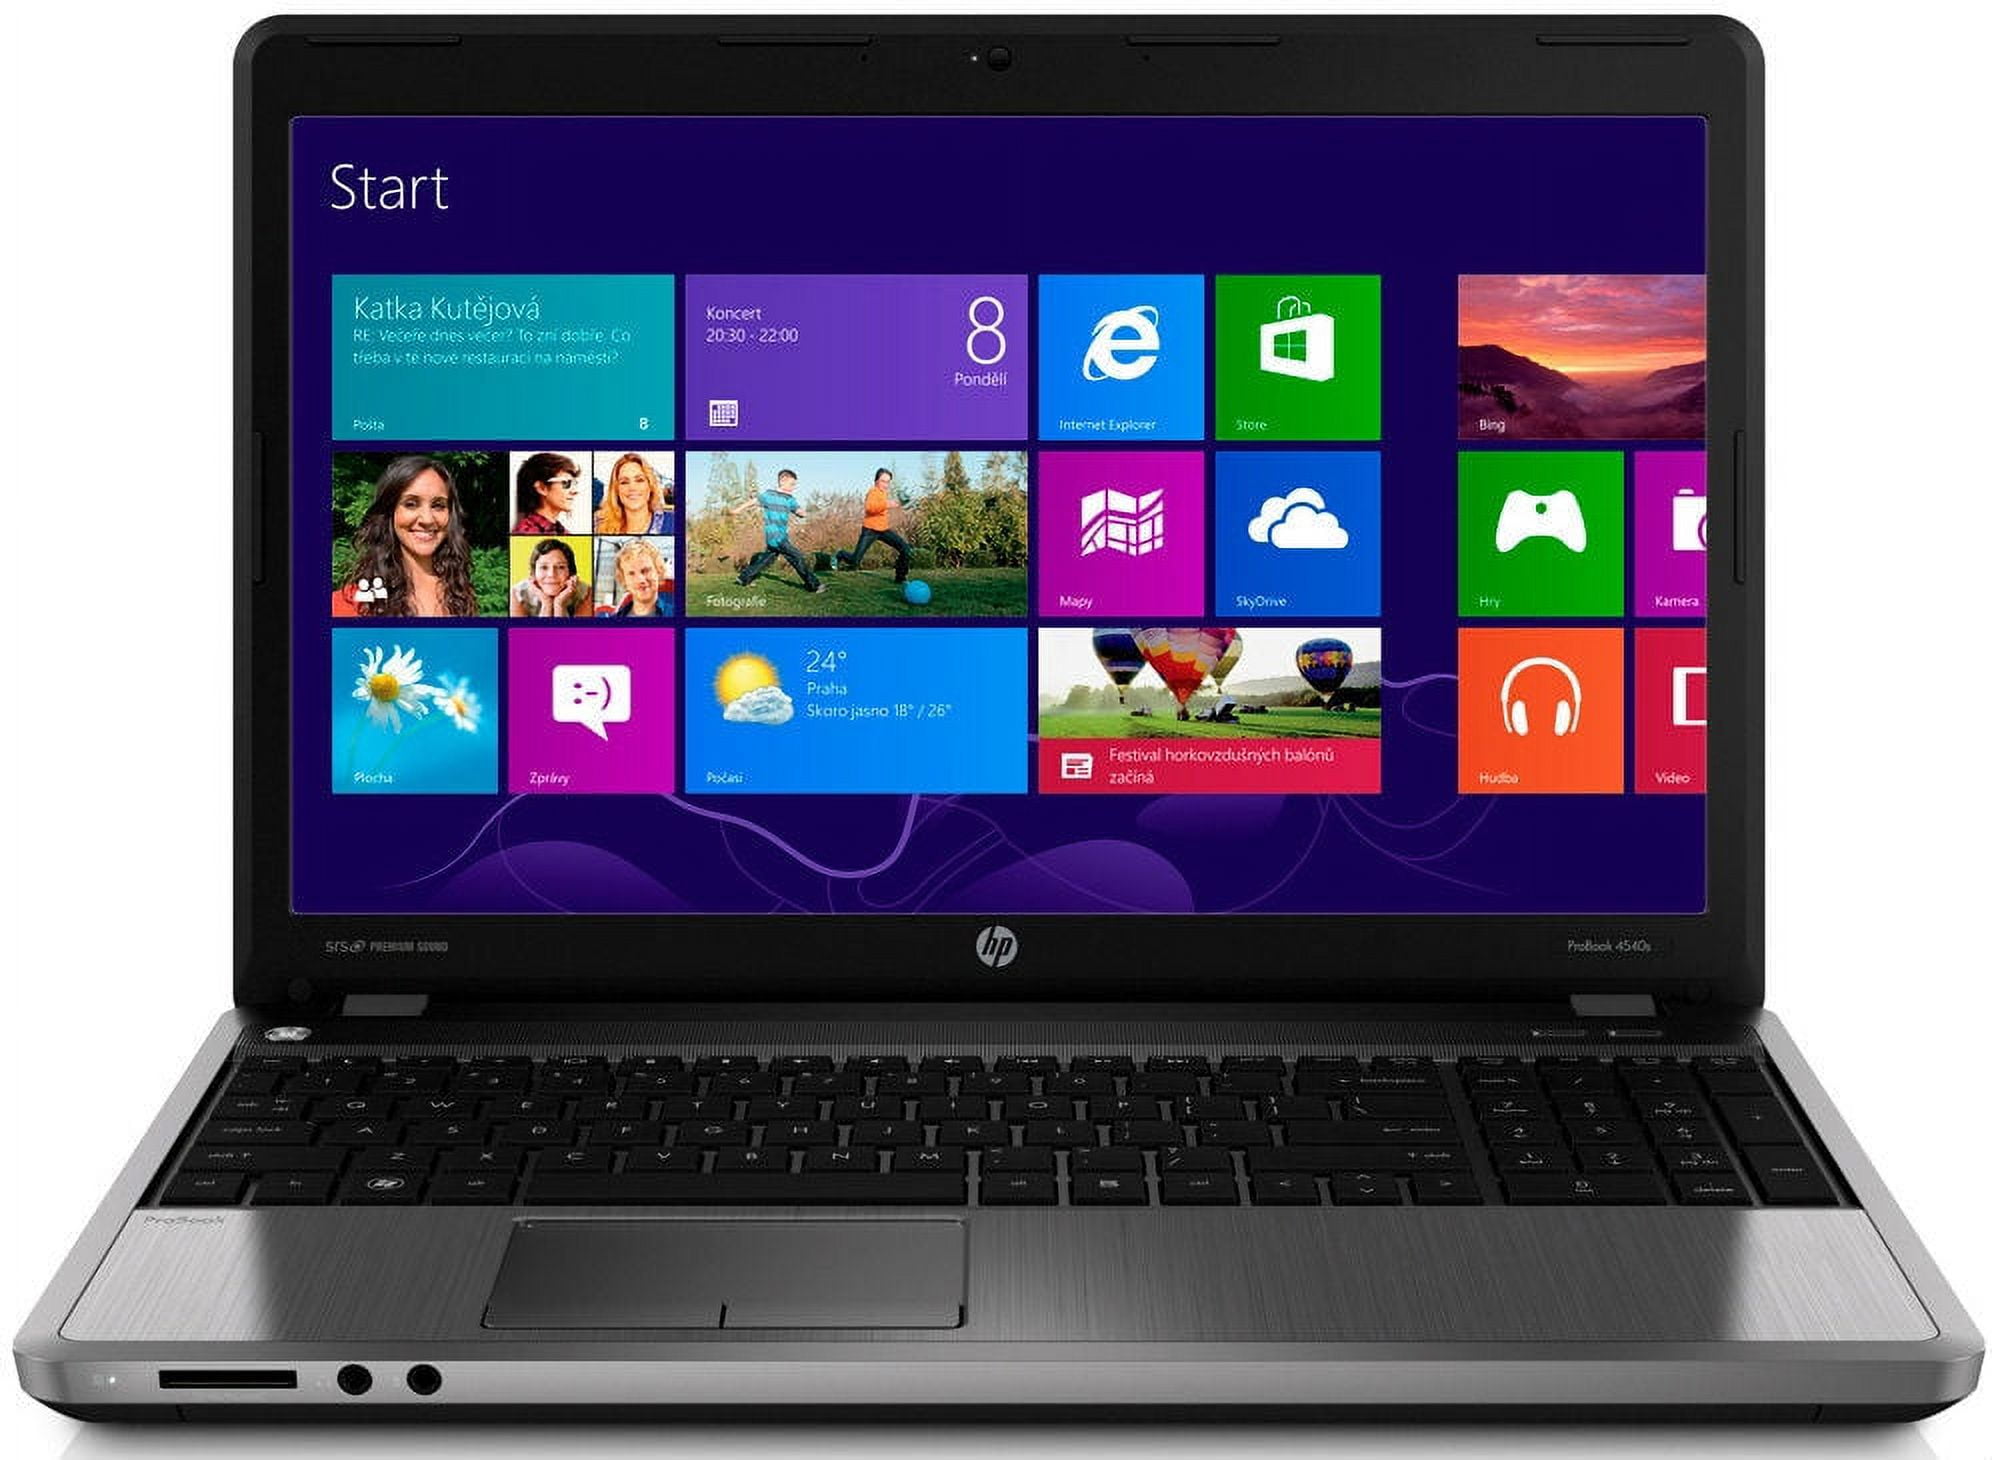 HP ProBook 4540s Notebook- 500GB HDD, 4GB RAM, i3-3110M CPU, Windows 10 Pro  - Used